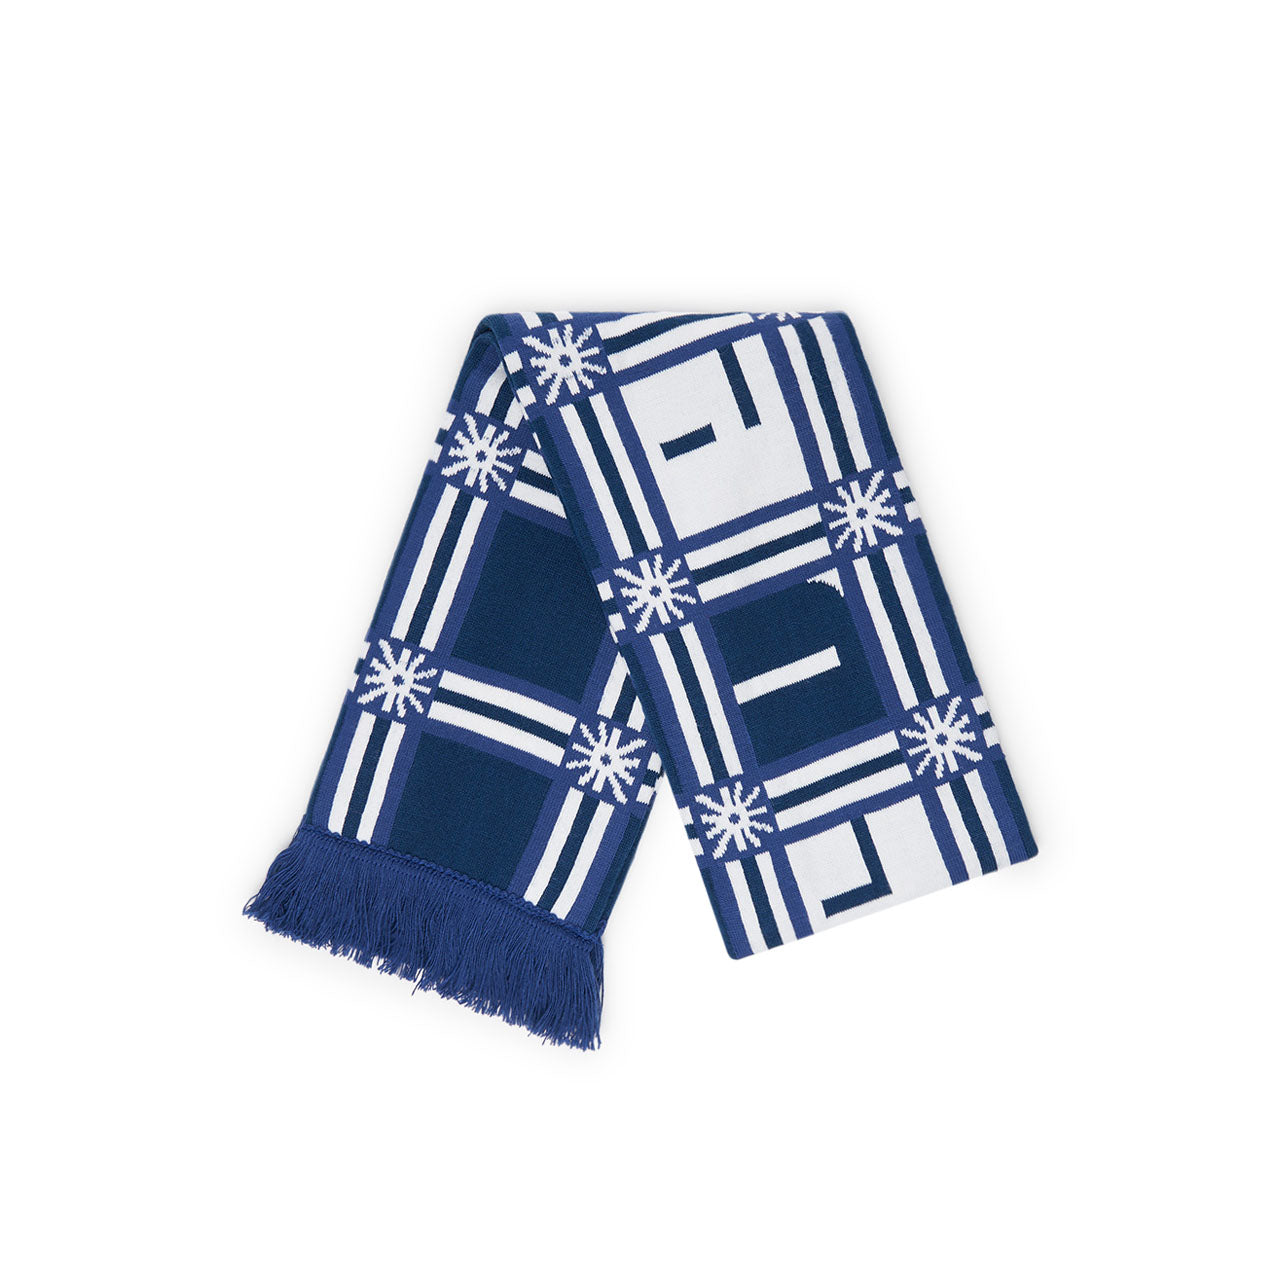 rassvet dice sports scarf (blue)